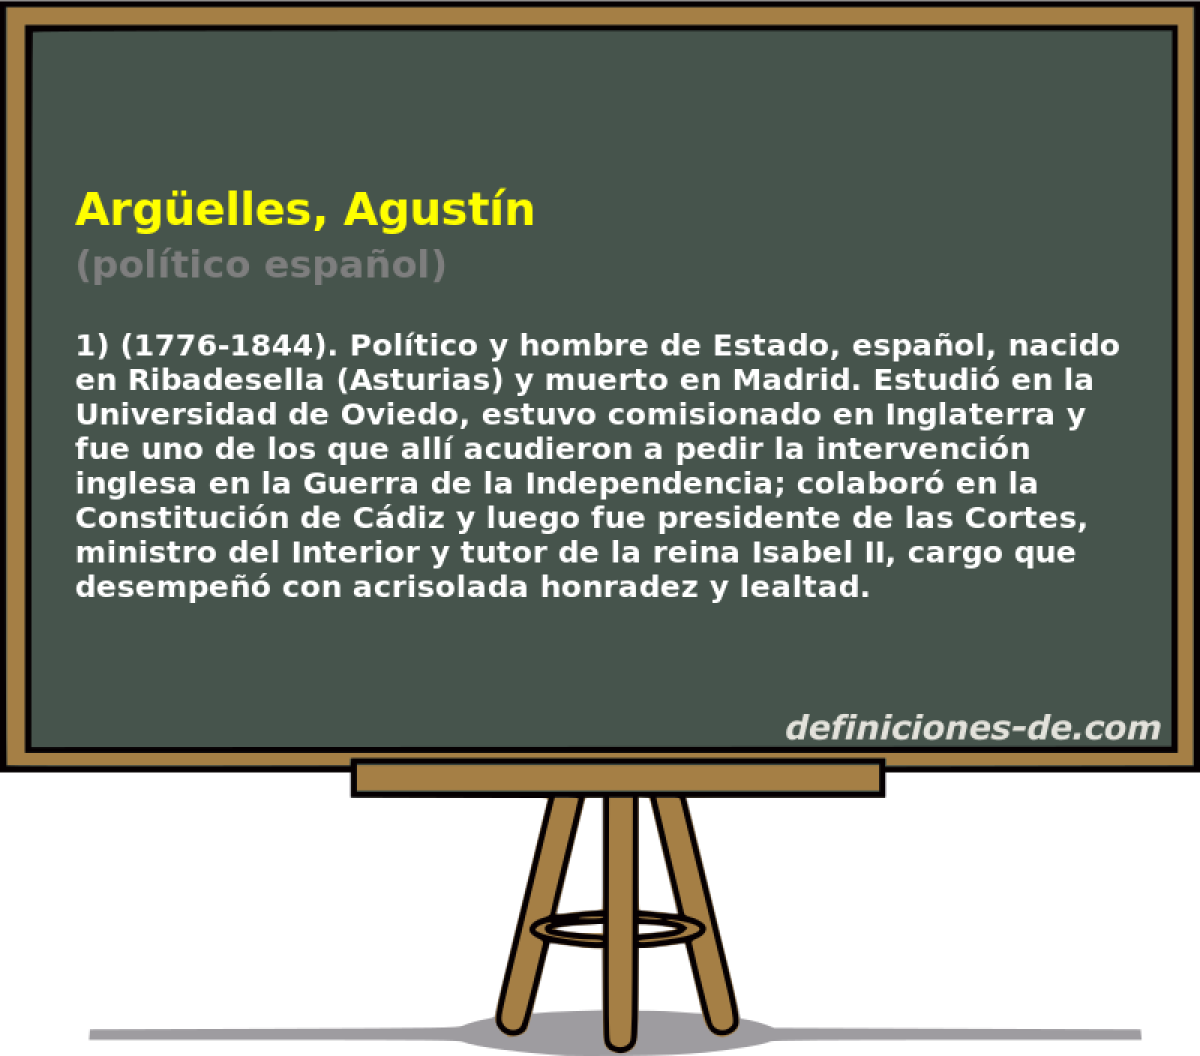 Argelles, Agustn (poltico espaol)